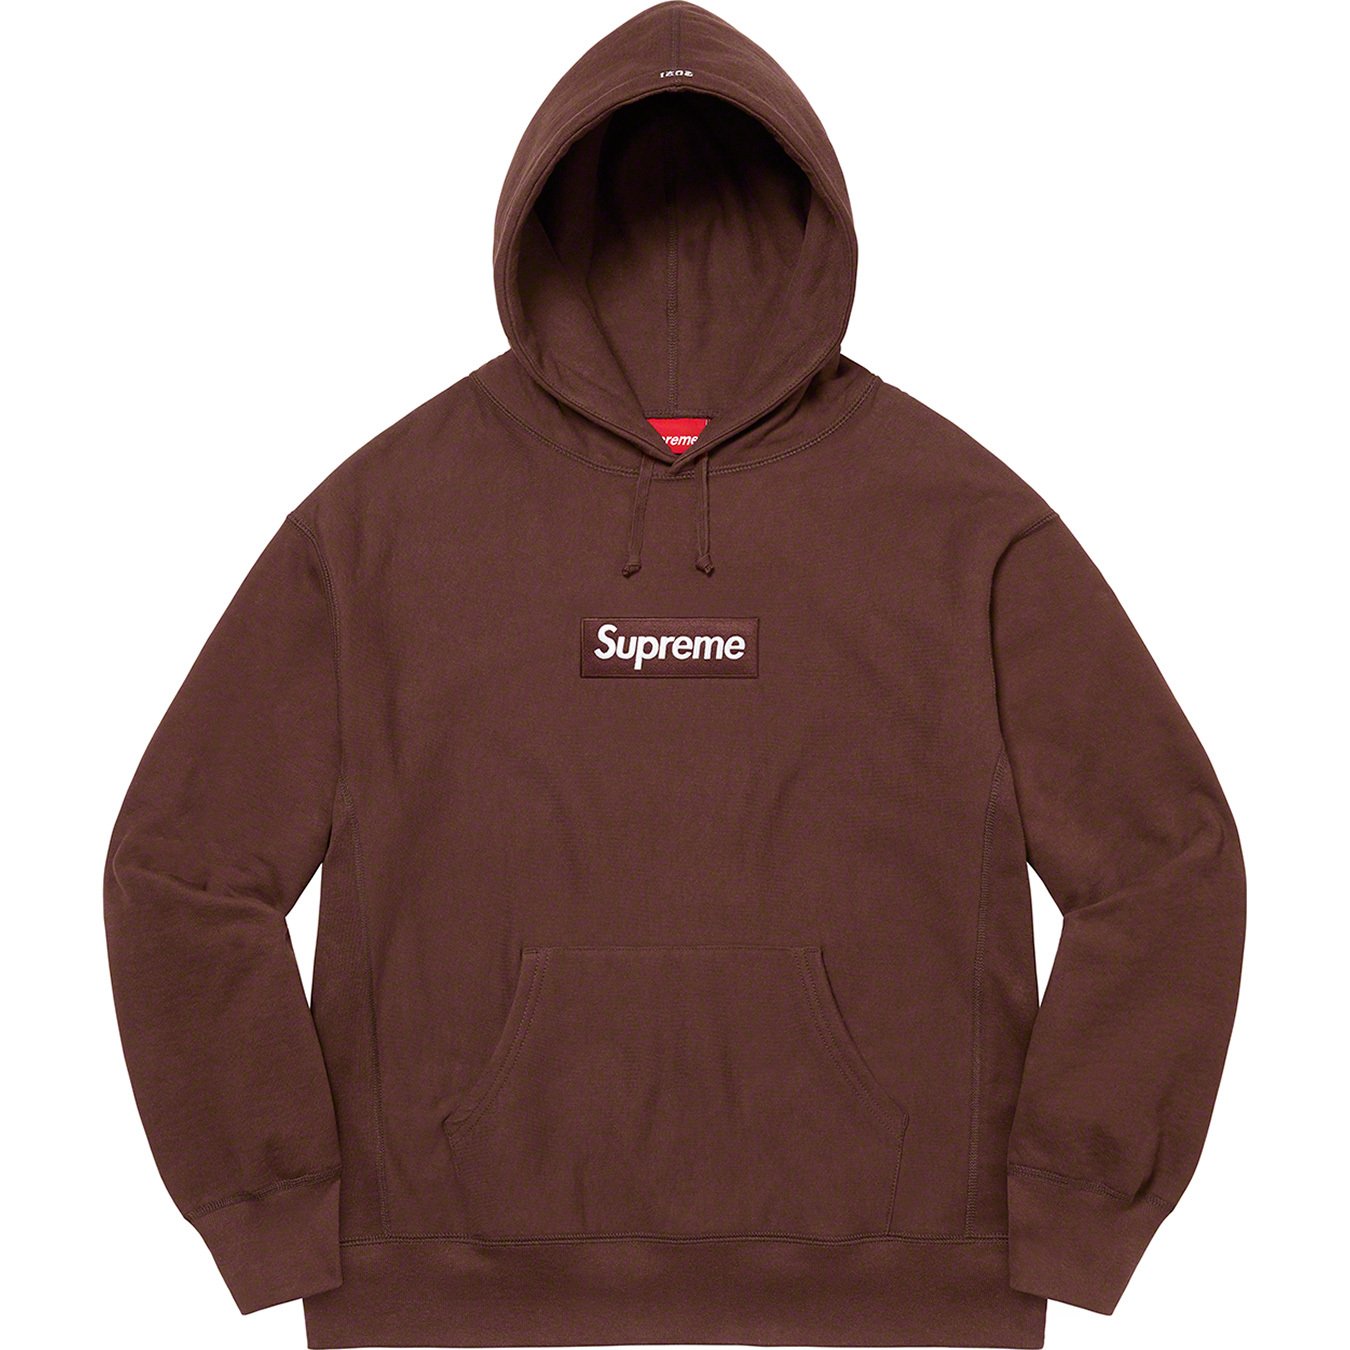 Supreme box logo hooded sweatshirt 2021身幅と着丈を教えて頂きたいです